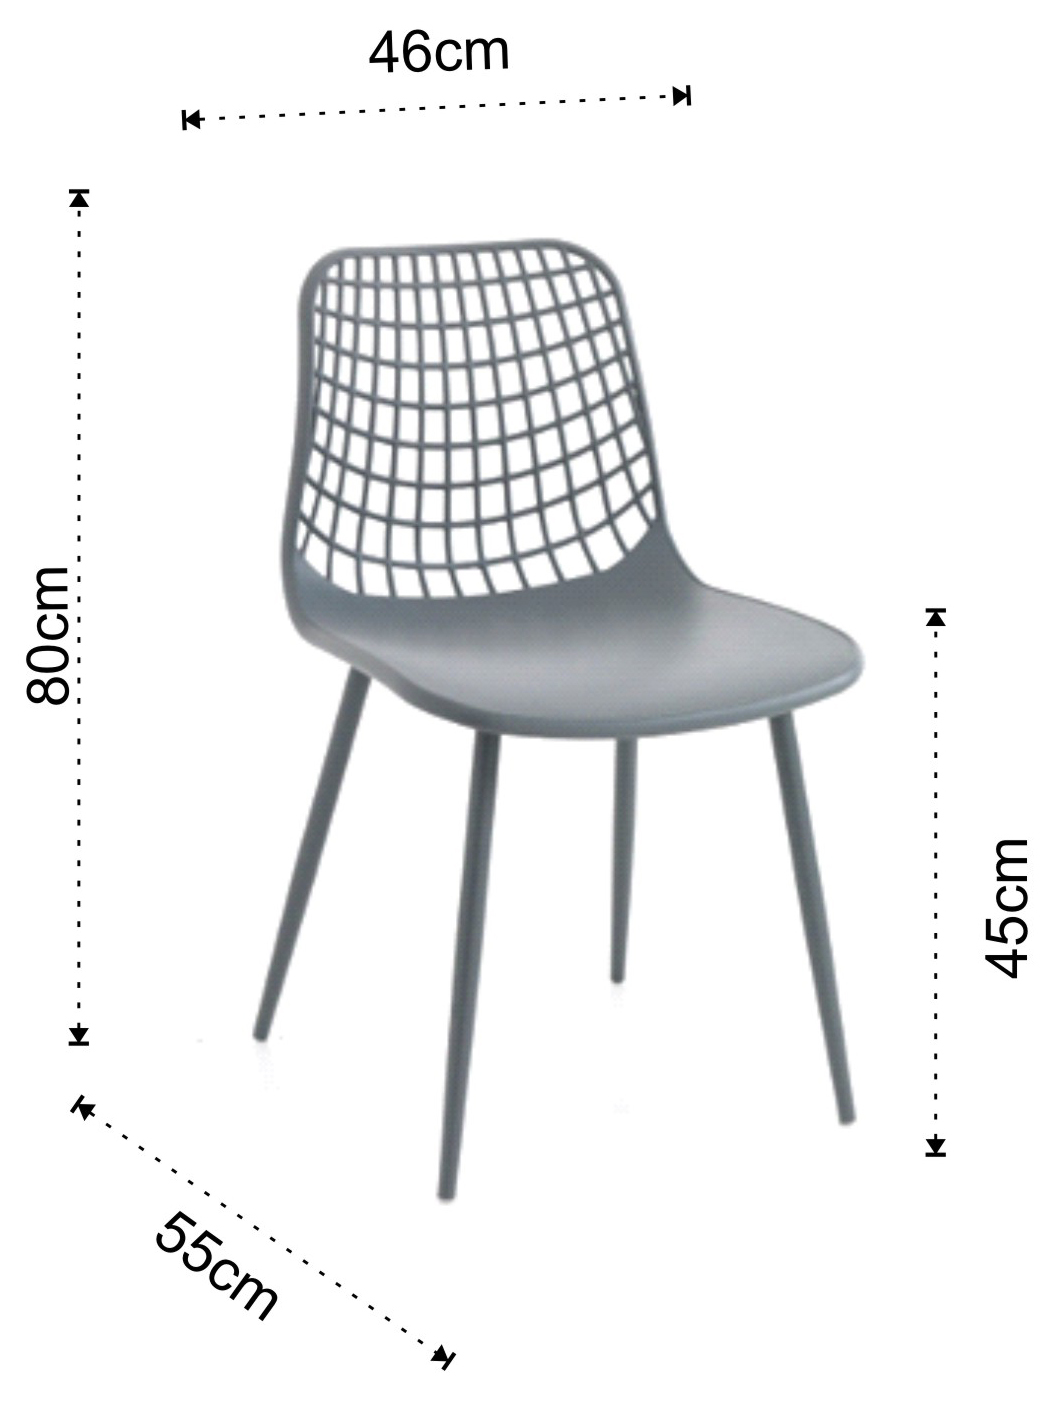 Dimensiones de la silla Nairobi de Tomasucci